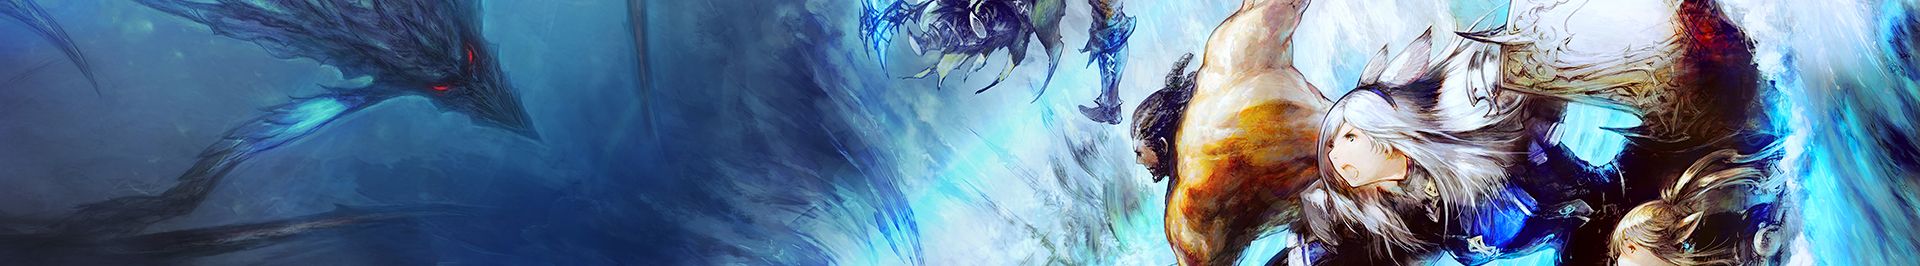 Final Fantasy 14 A Realm Reborn leviathan key artwork strip